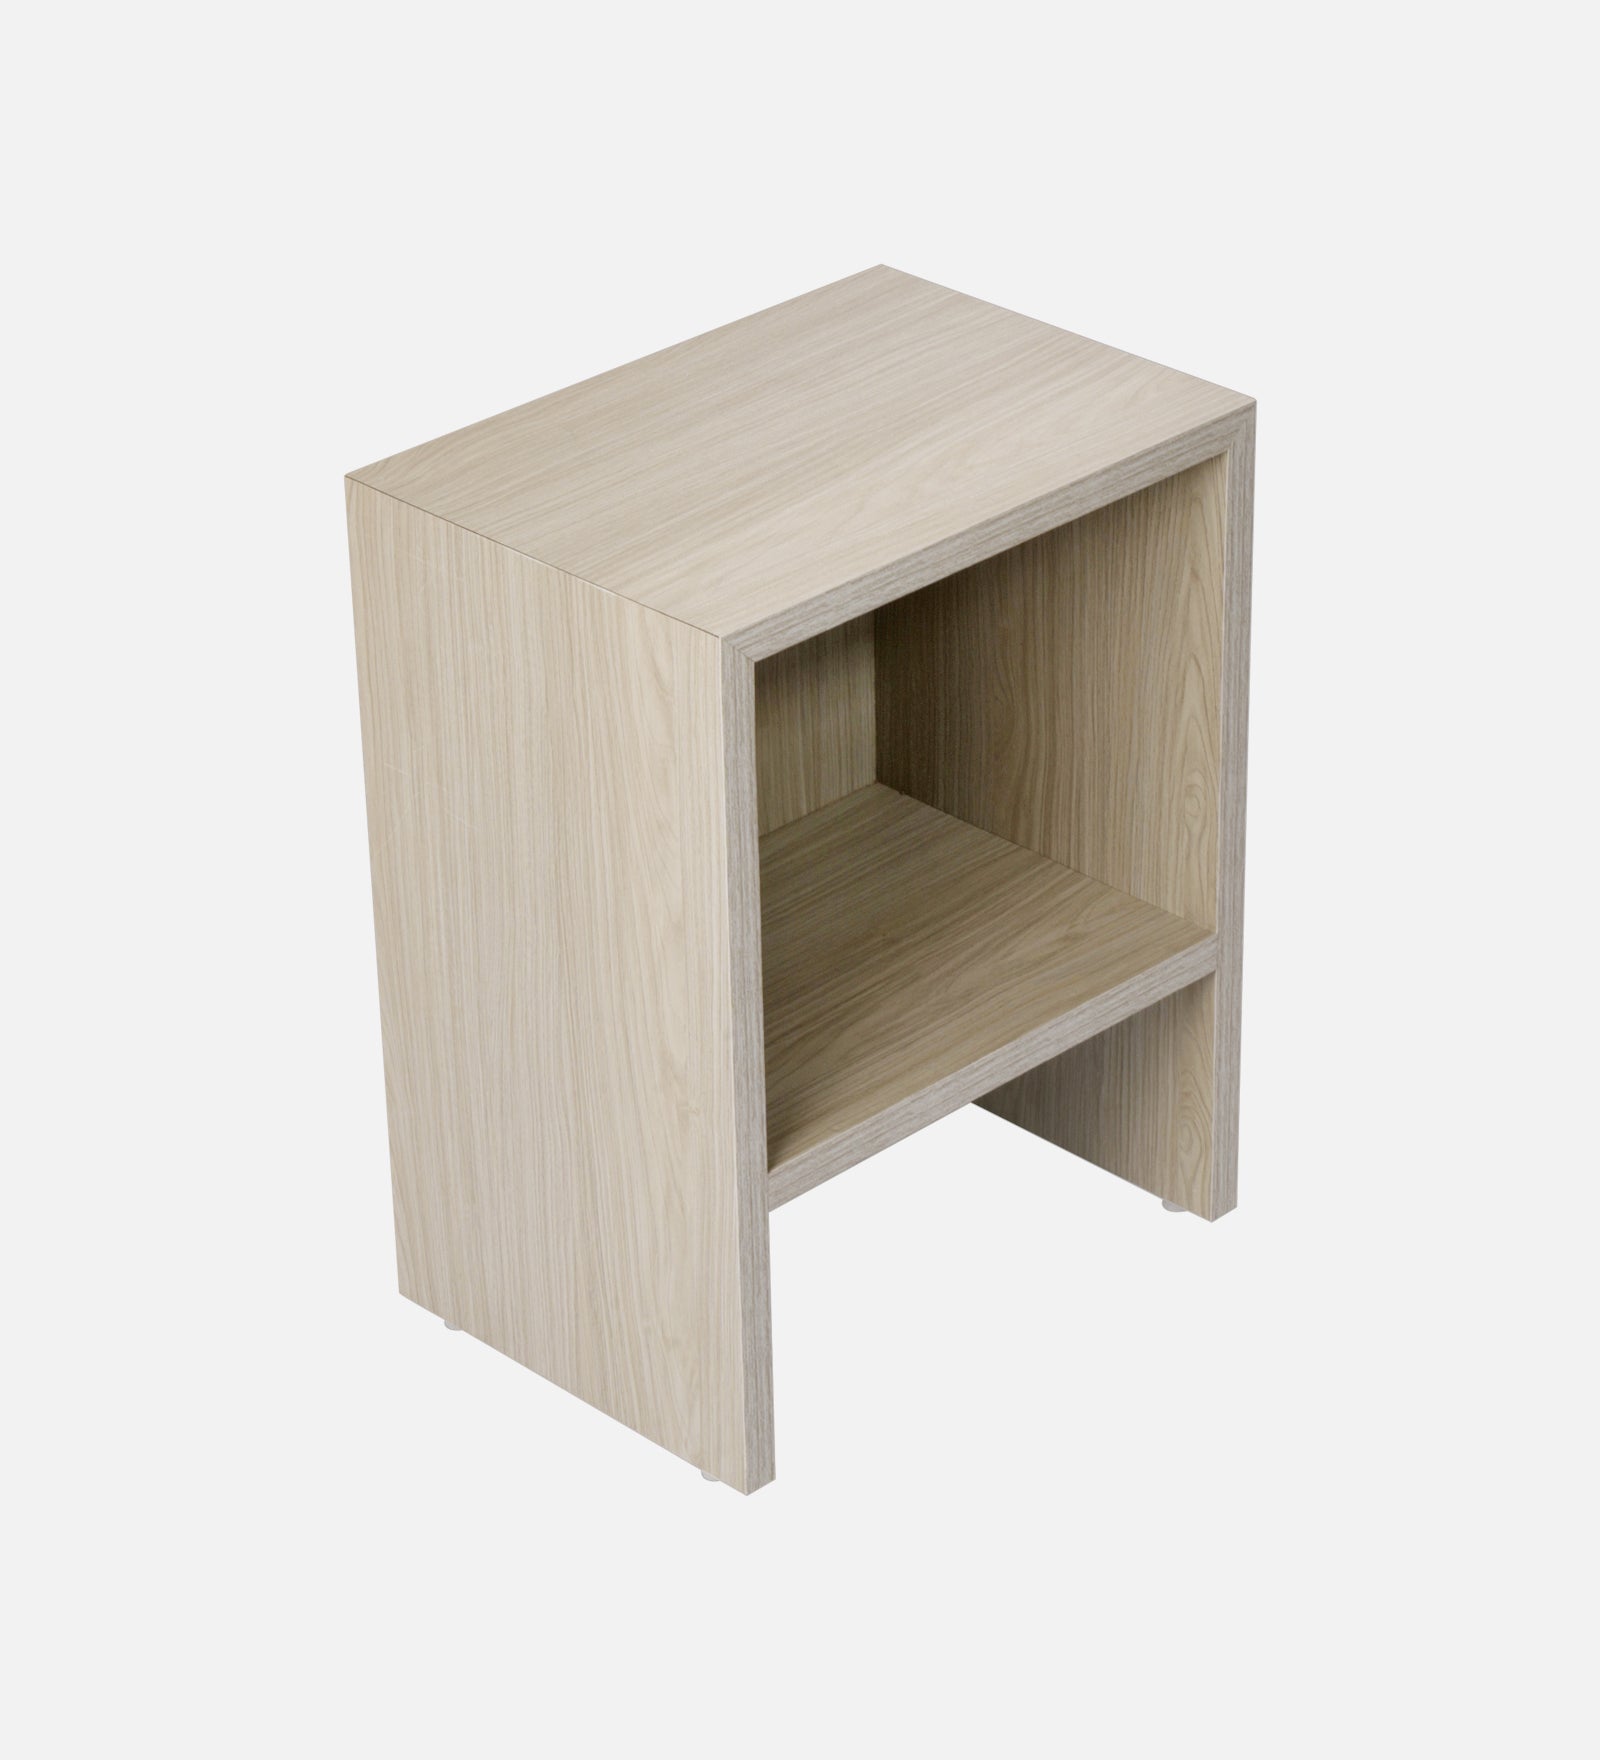 Bedside Table, Side Table, Bedside Open Storage, Bedroom Decor, Wooden Table